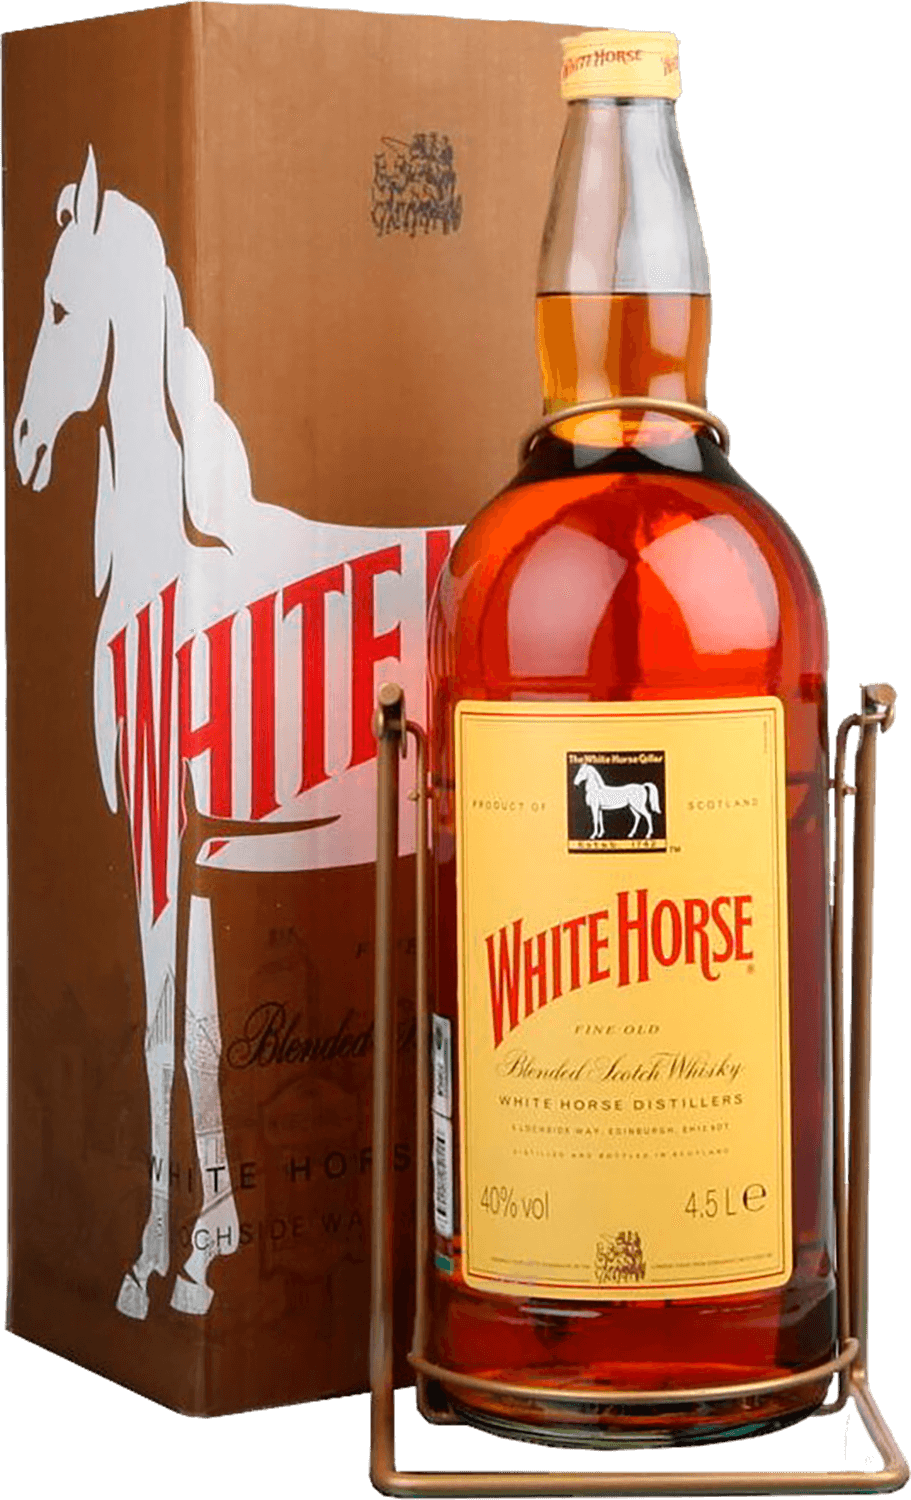 White Horse Blended Scotch Whisky (gift box) compass box rogues banquet blended scotch whisky gift box